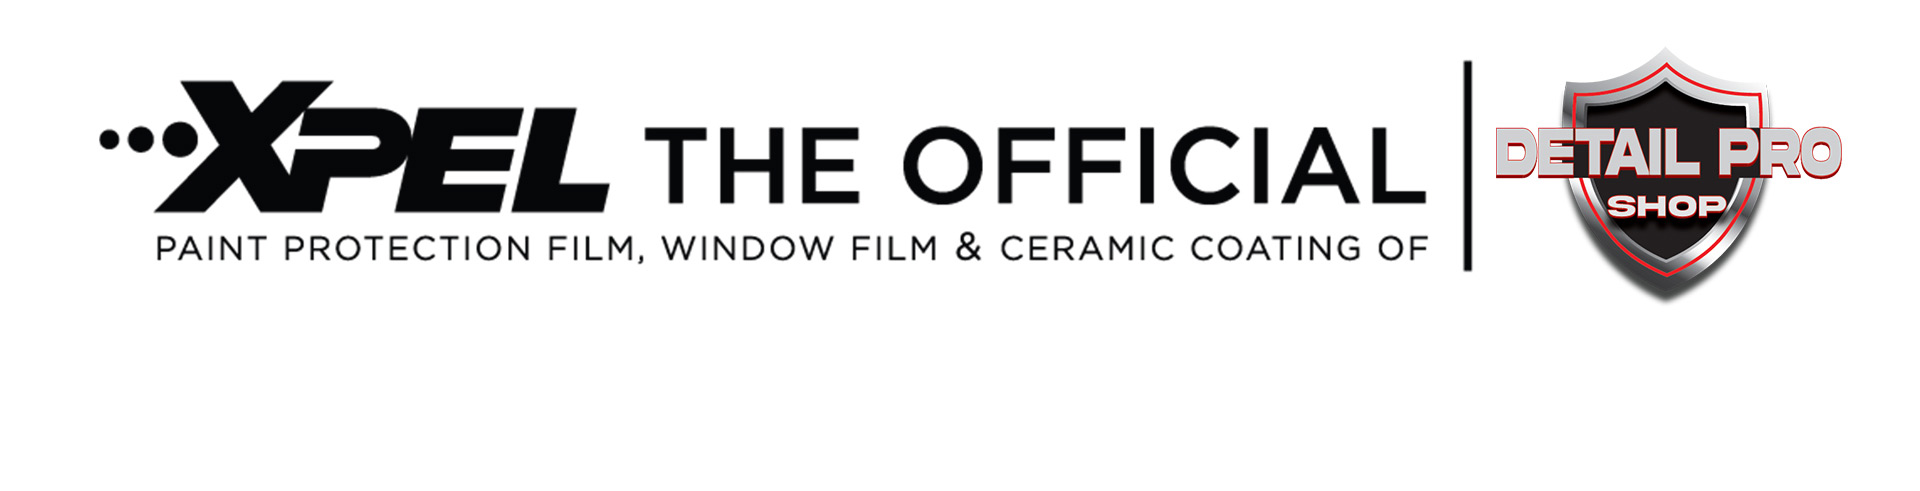 Xpel Official Film & Coating of Detail Pro Shop Website Banner